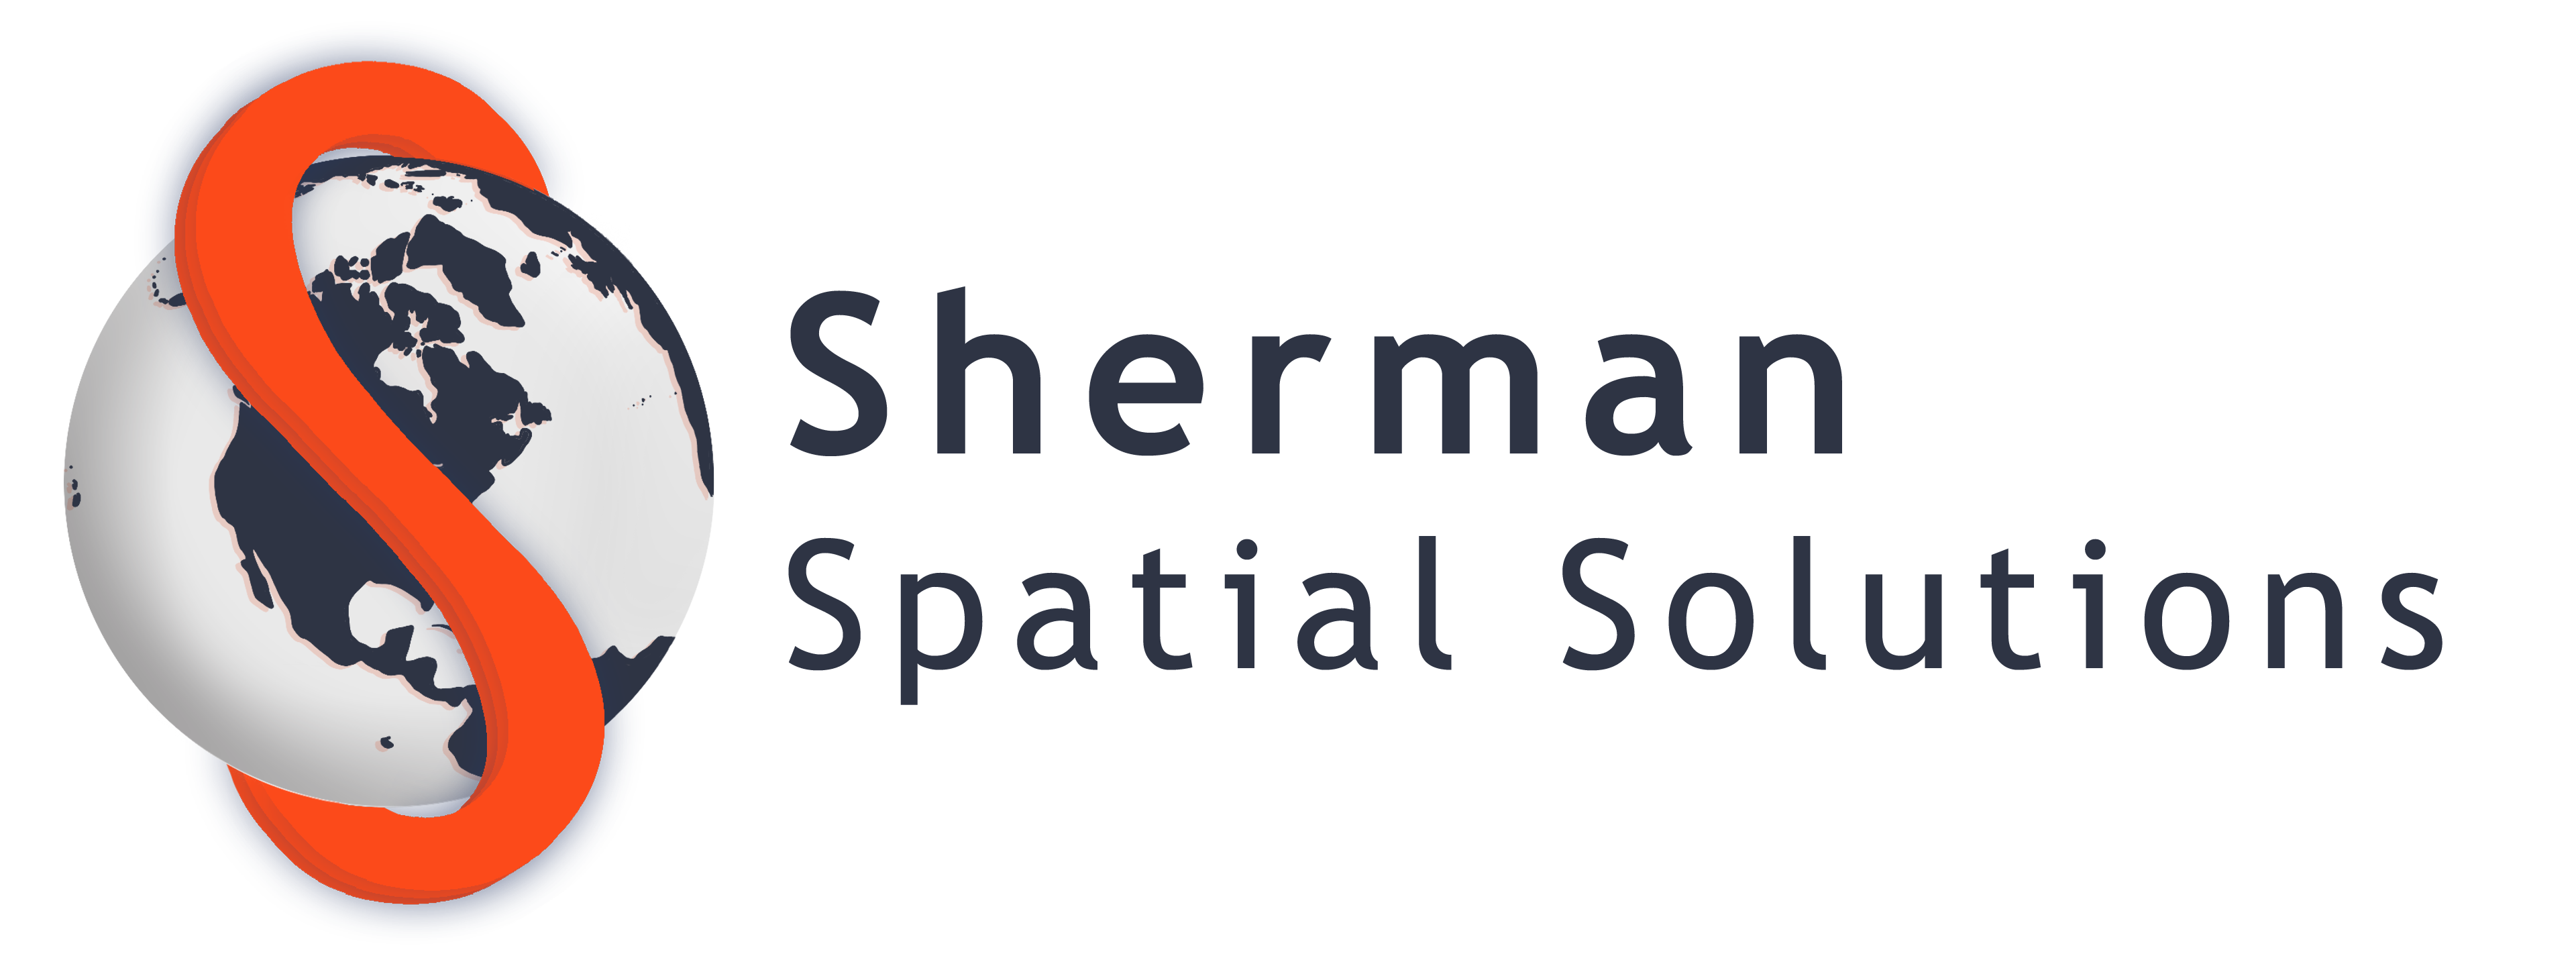 Sherman Spatial Solutions